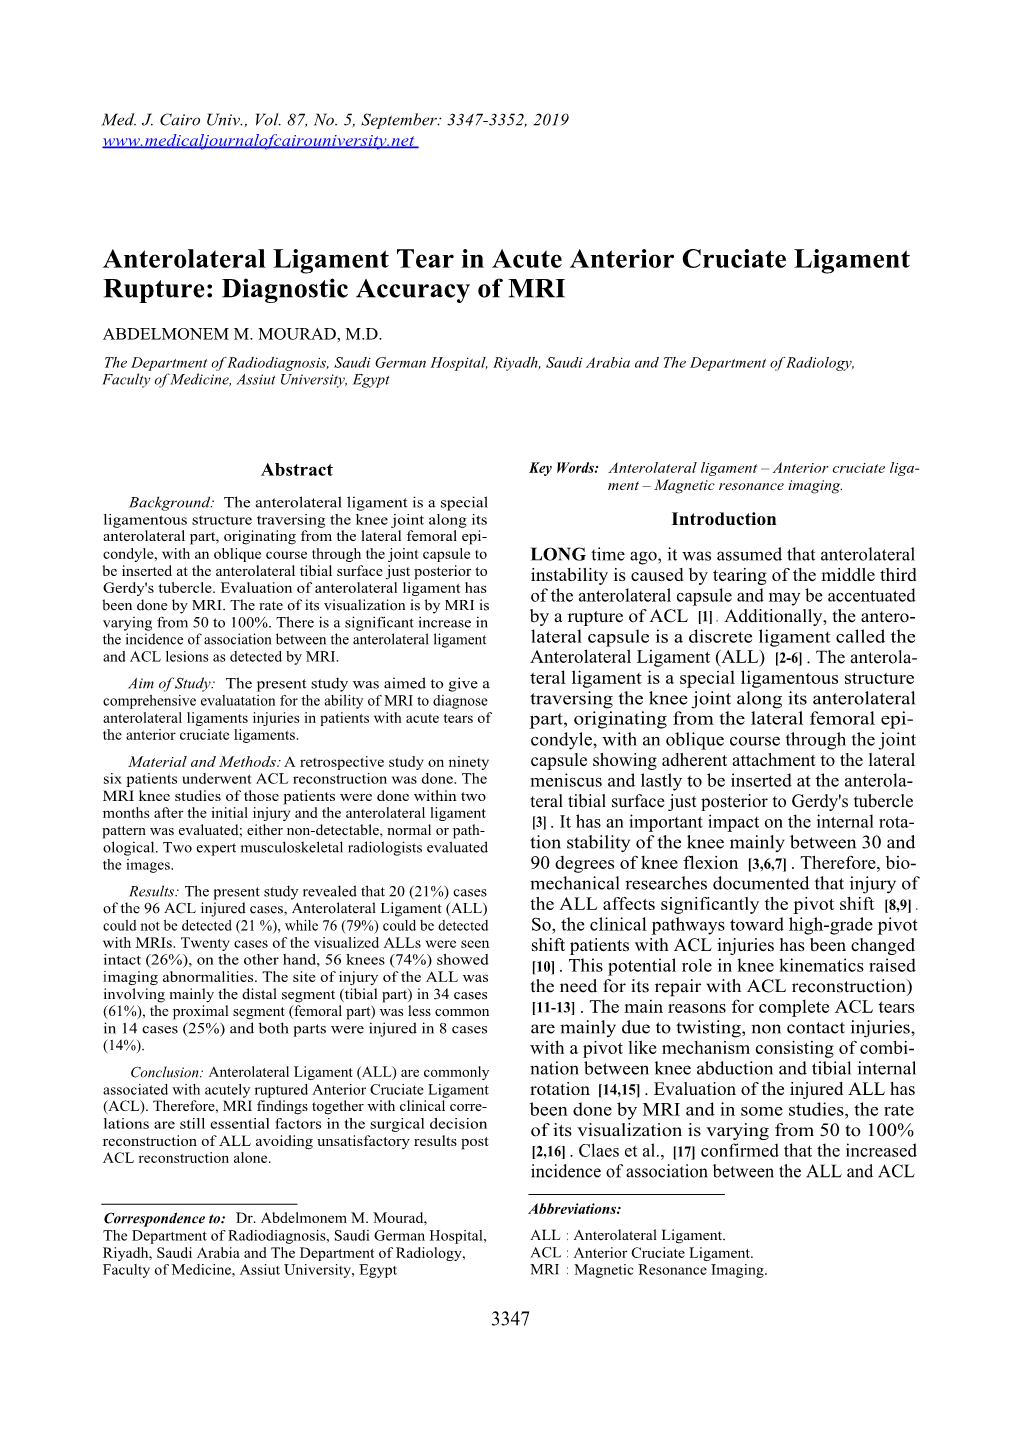 Anterolateral Ligament Tear in Acute Anterior Cruciate Ligament Rupture